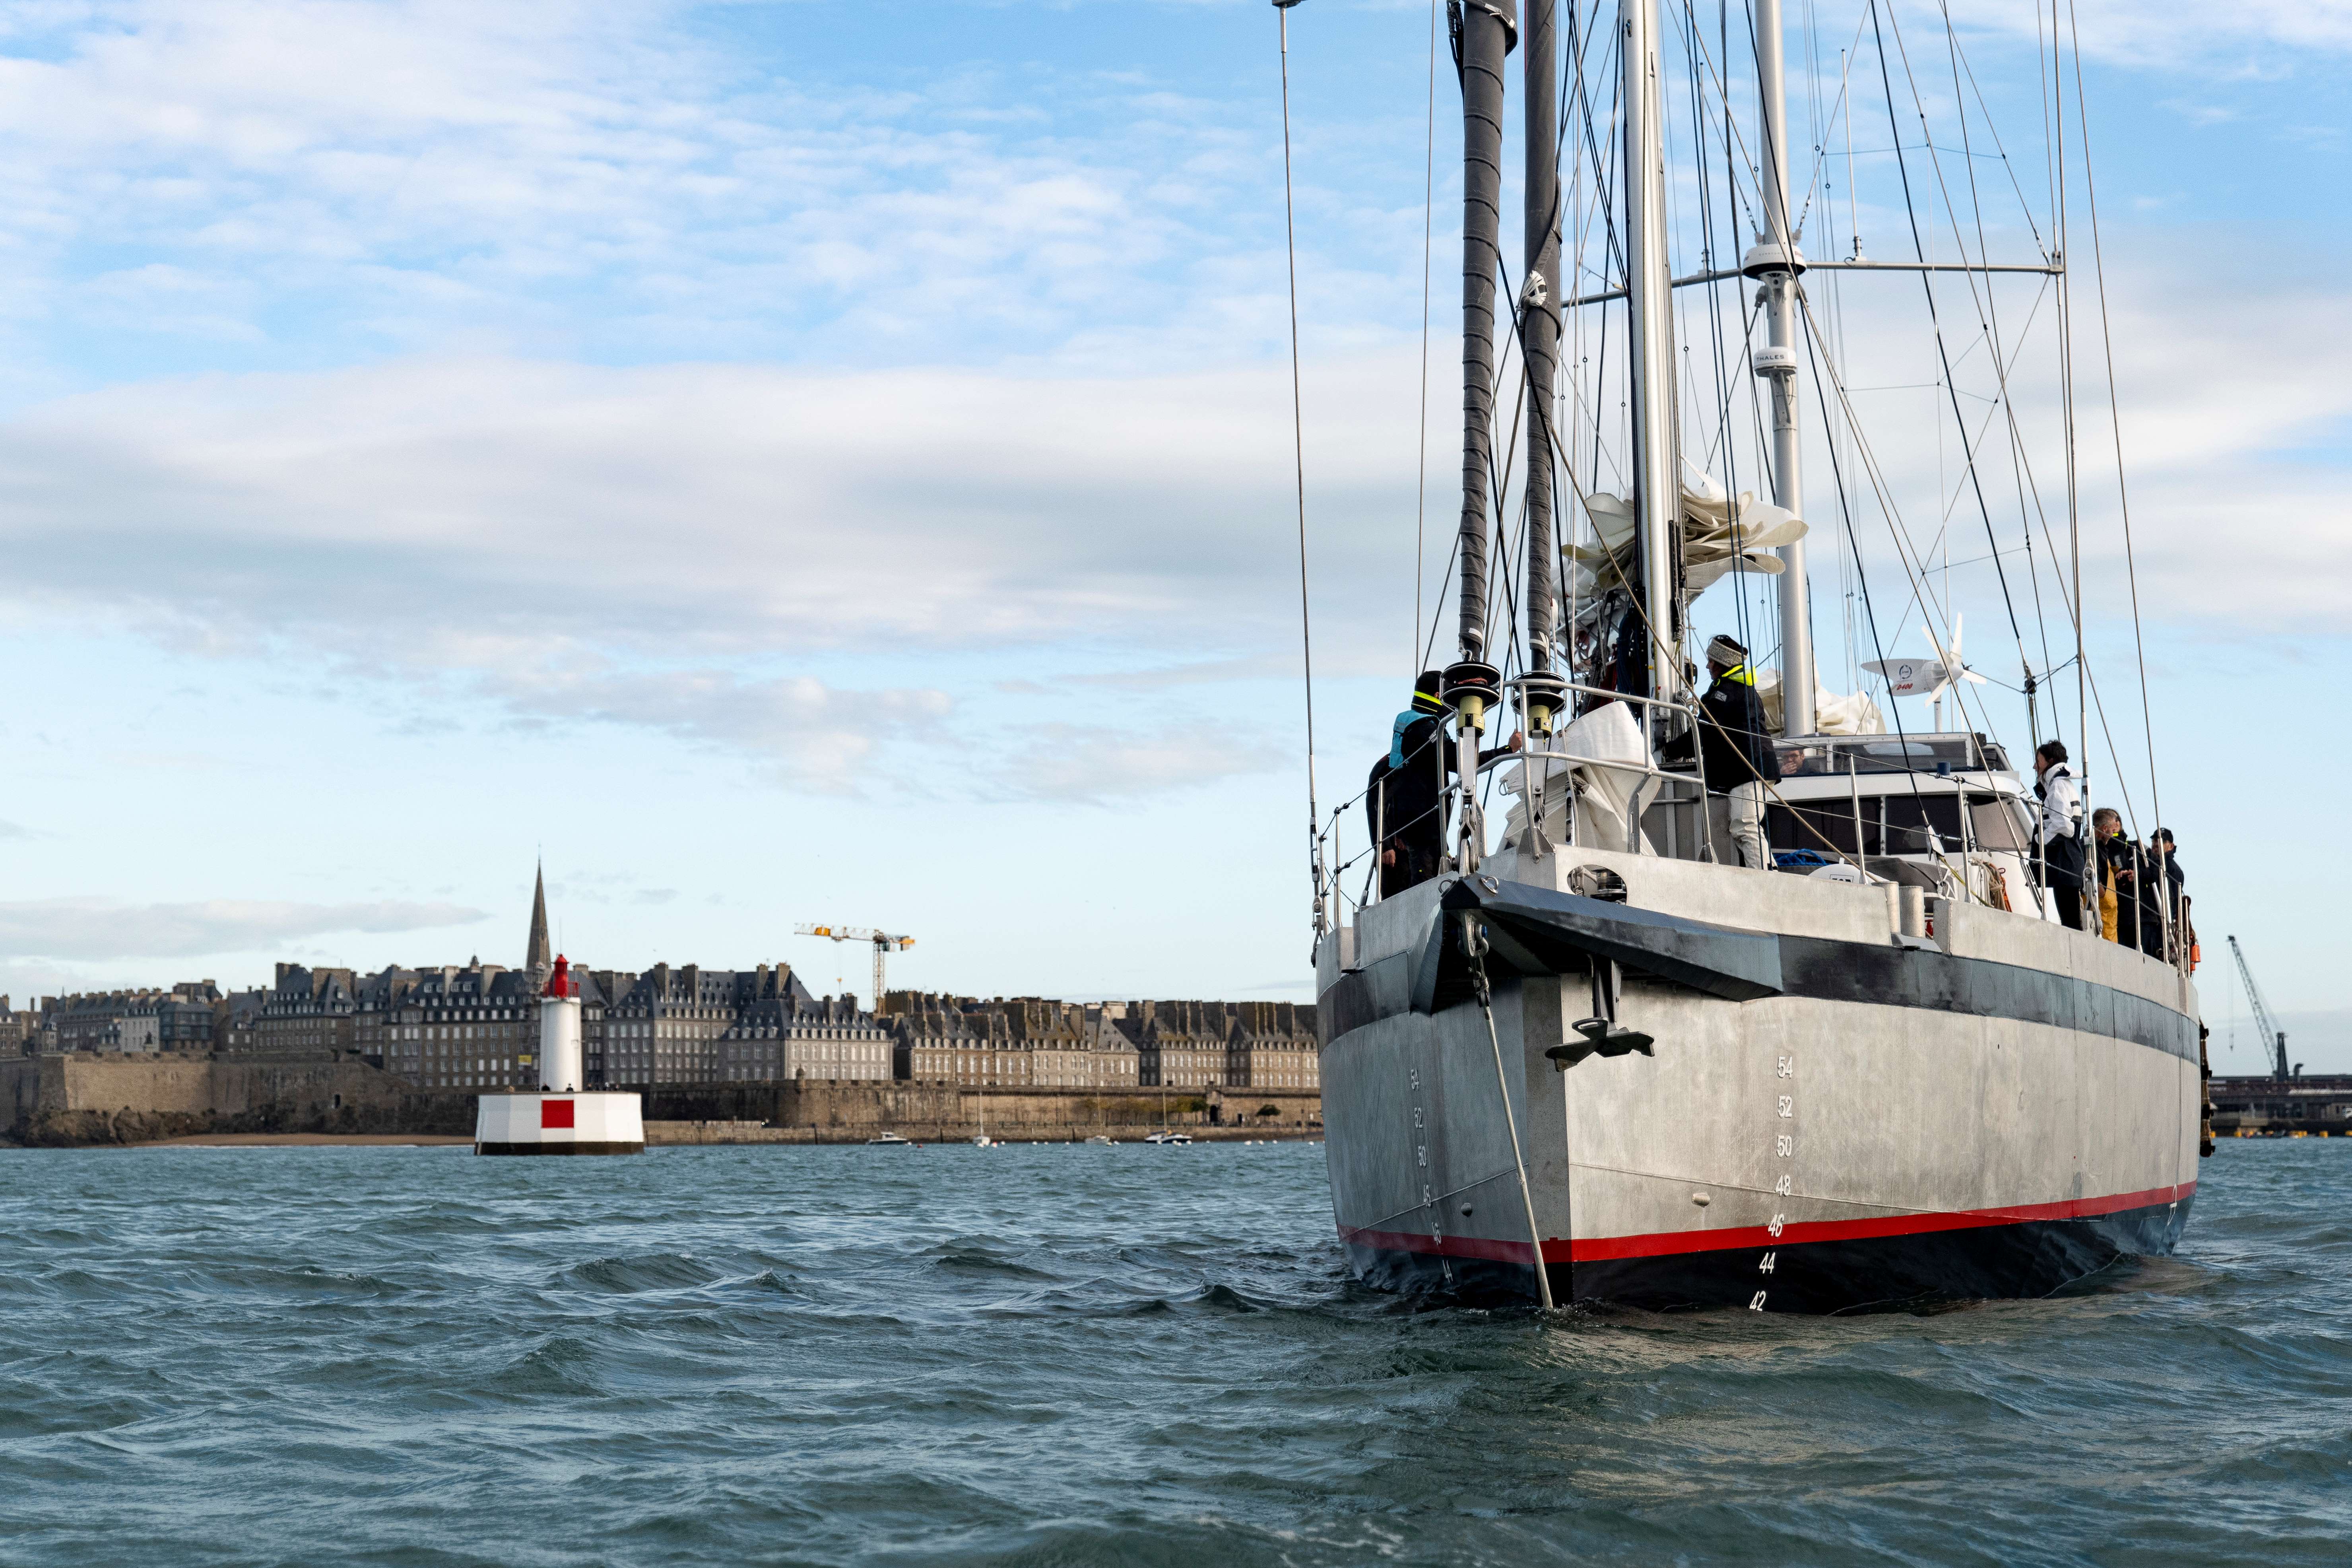 Grain de Sail cargo sailboat departs the port of St Malo